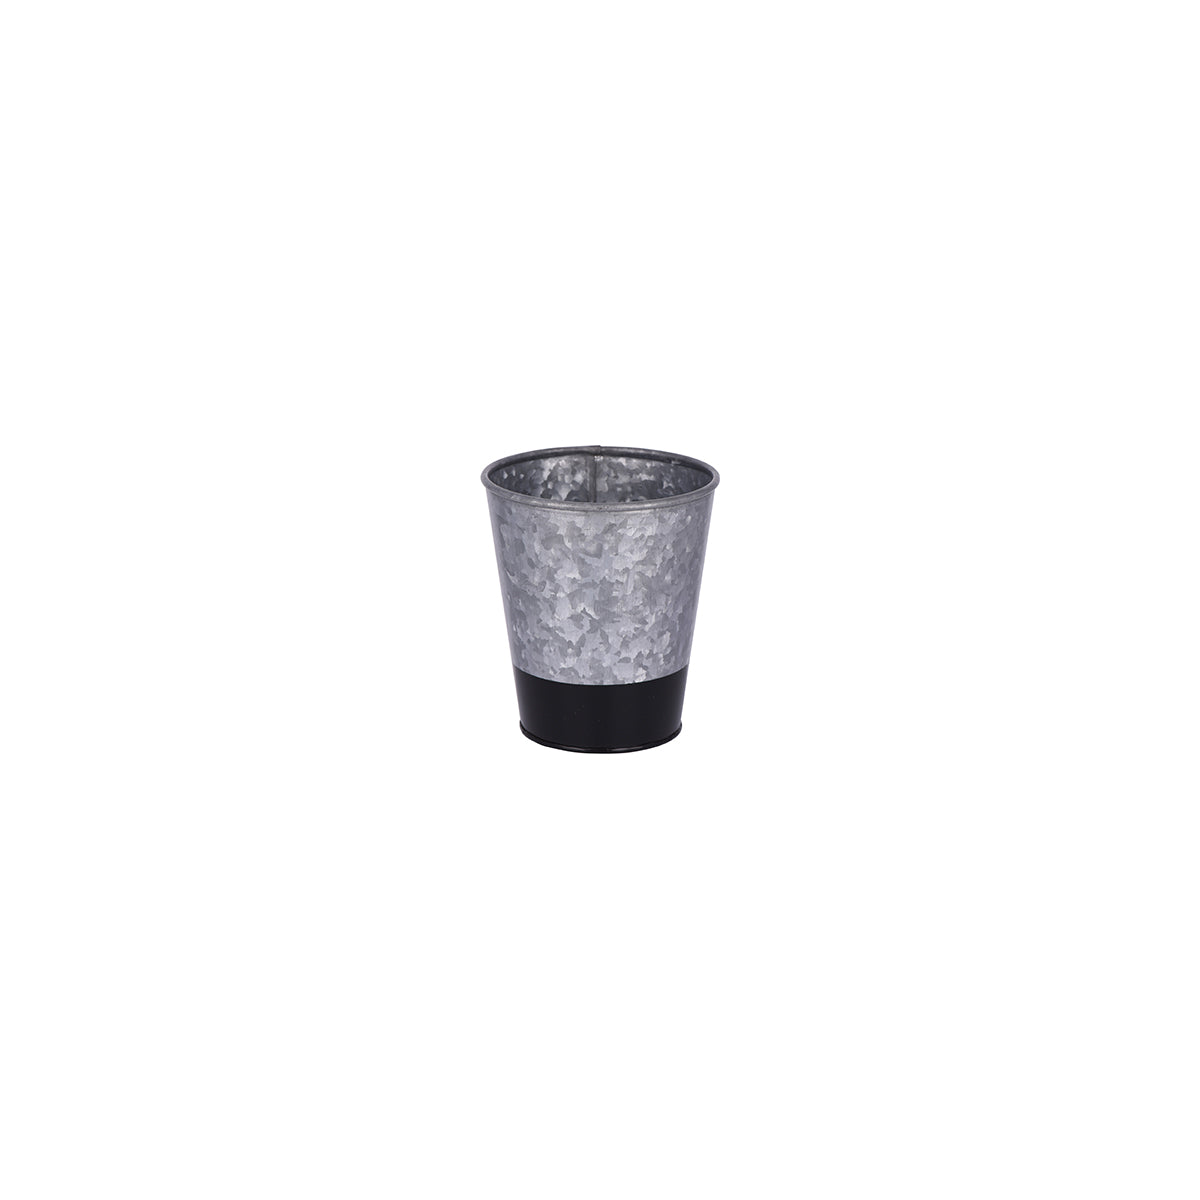 78604 Chef Inox Coney Island Pot Galvanised with Black Base 95x105mm Tomkin Australia Hospitality Supplies